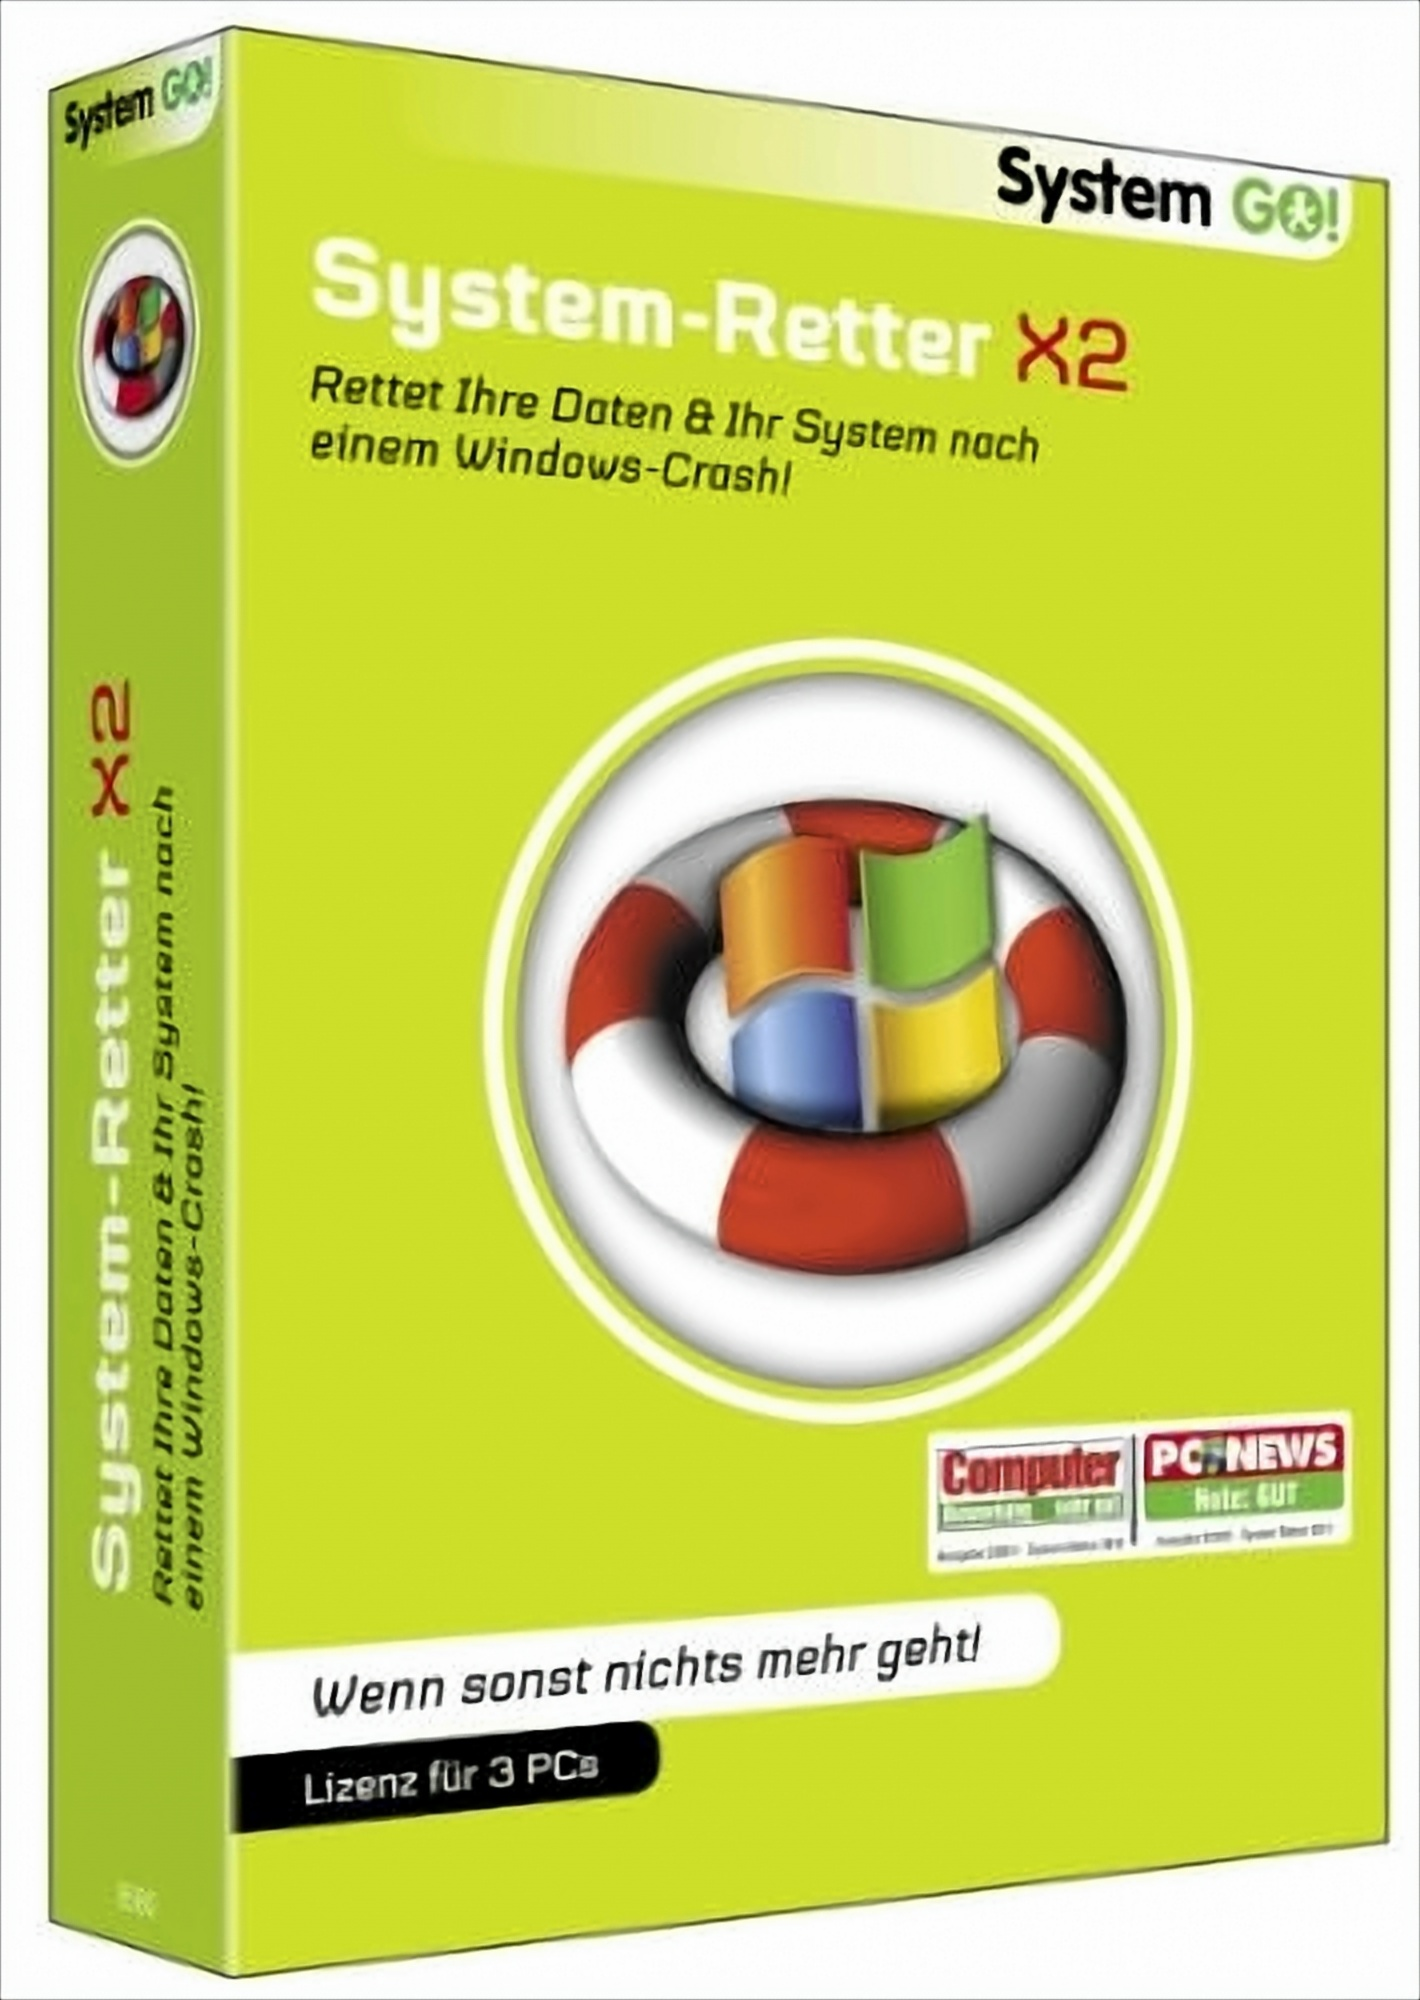 System Go! System-Retter [PC] - X2